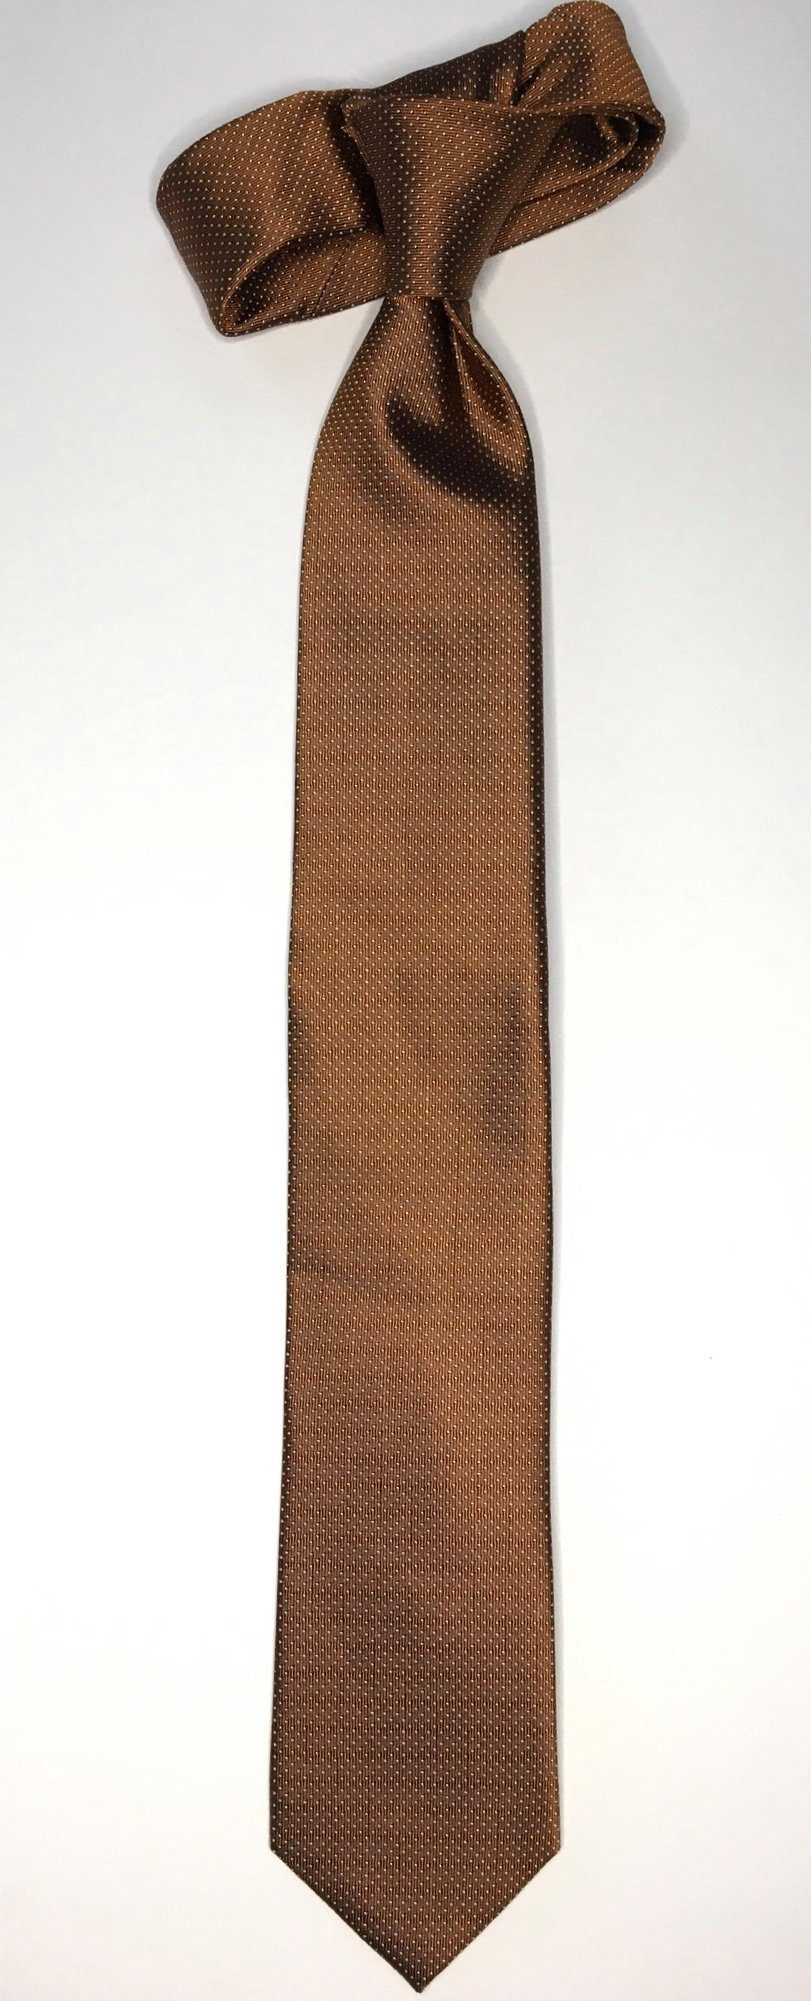 Cognac Krawatte Seidenfalter Seidenfalter 7cm Picoté Krawatte